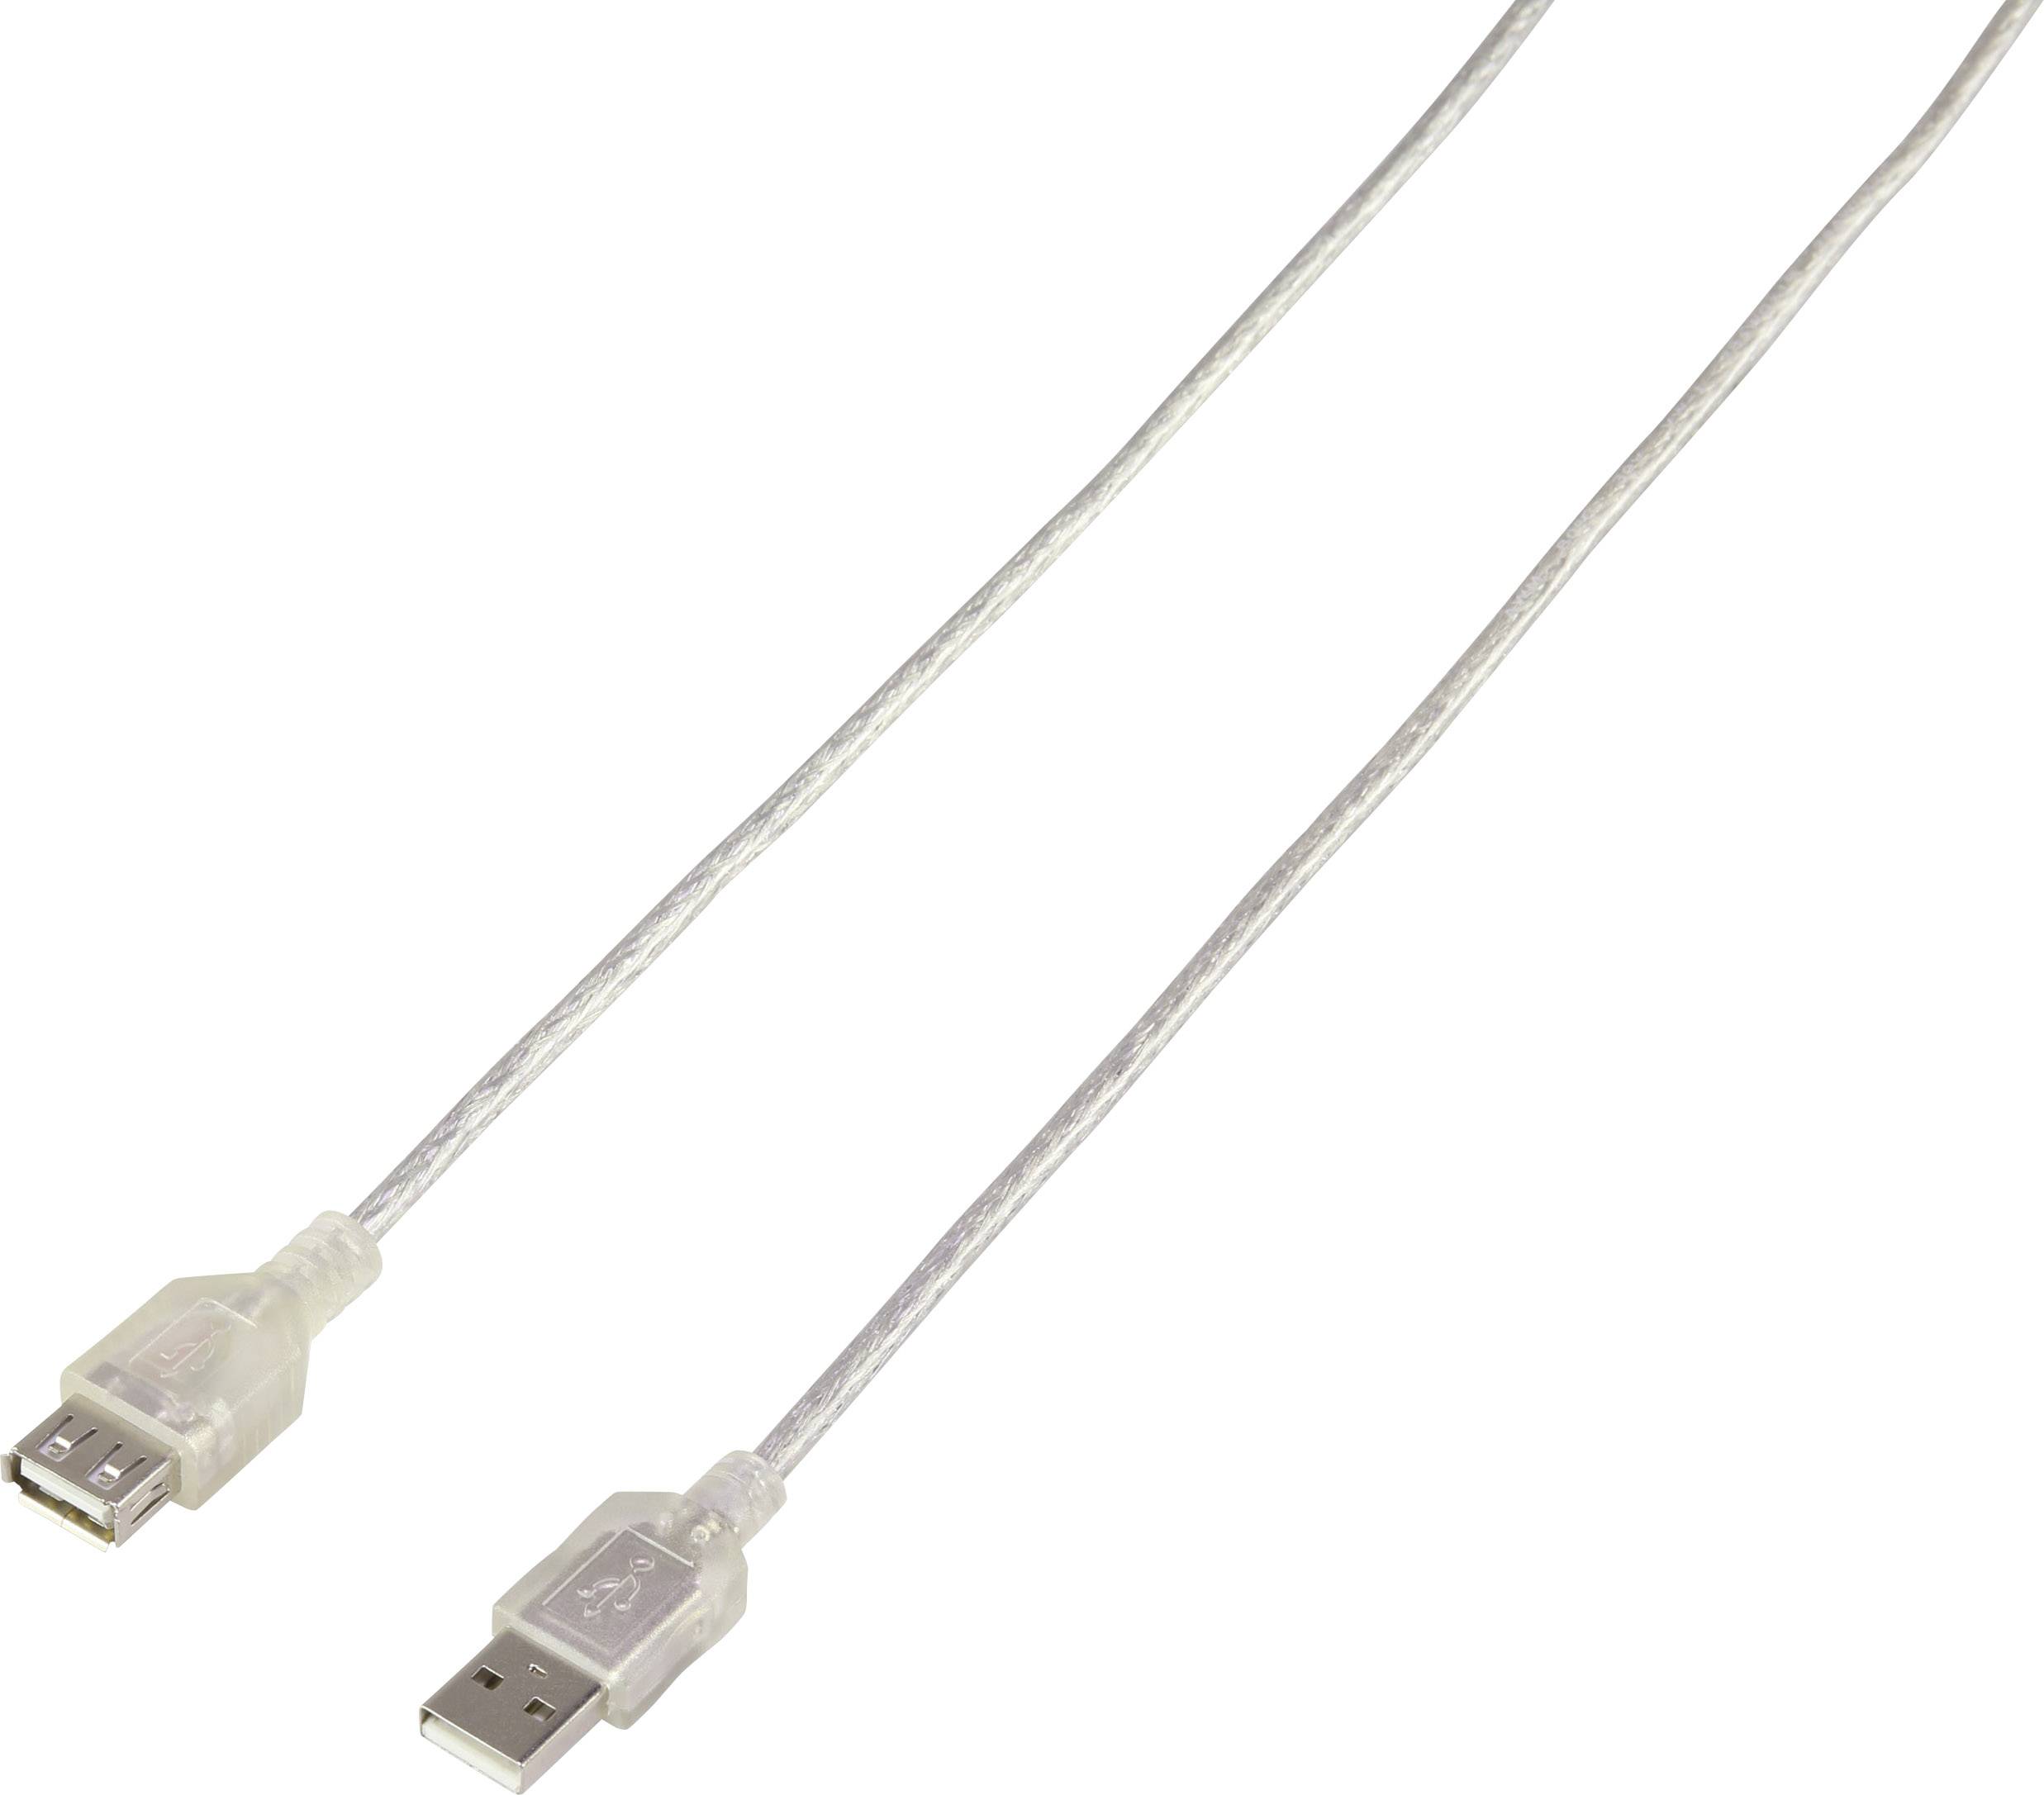 CONRAD Renkforce USB 2.0 Anschlusskabel [1x USB 2.0 Stecker A - 1x USB 2.0 Buchse A] 4.50 m Durchsic